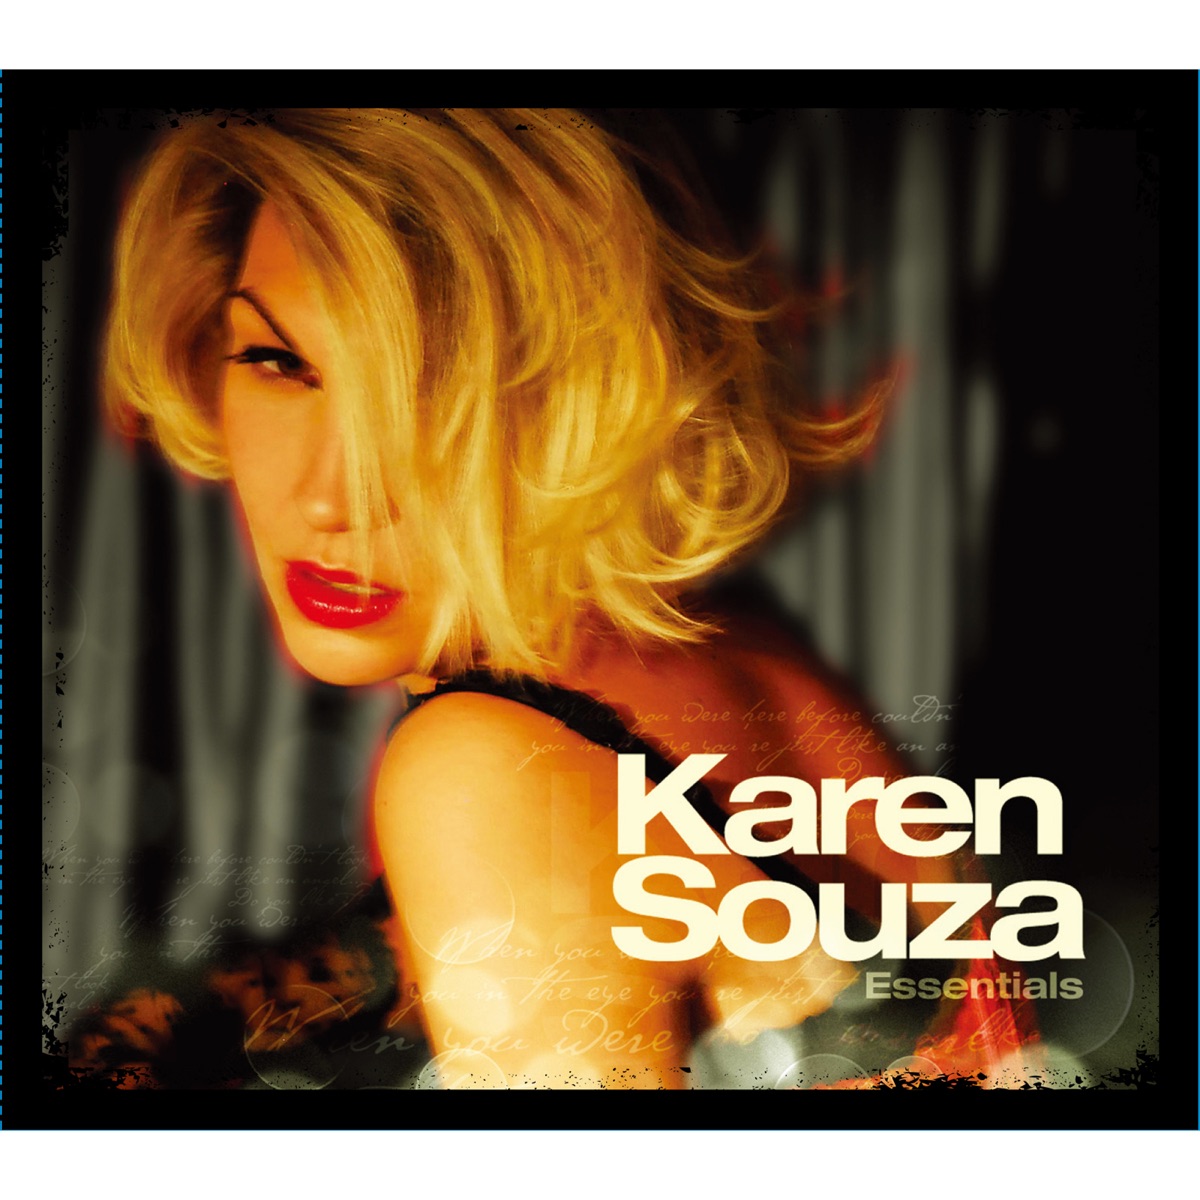 Essentials - Album by Karen Souza - Apple Music